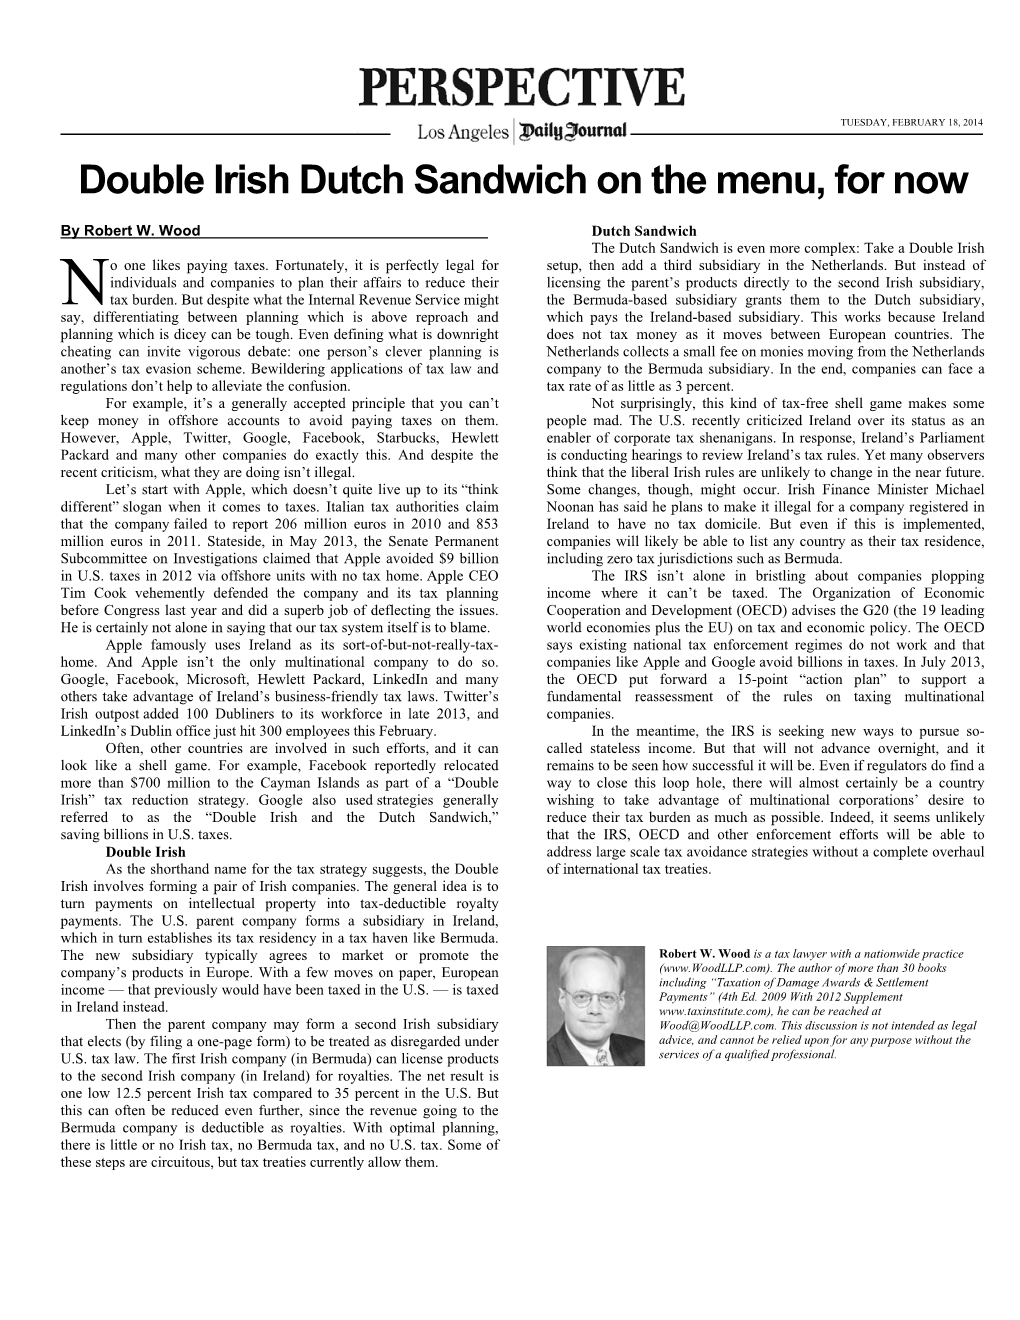 Double Irish Dutch Sandwich on the Menu, for Now